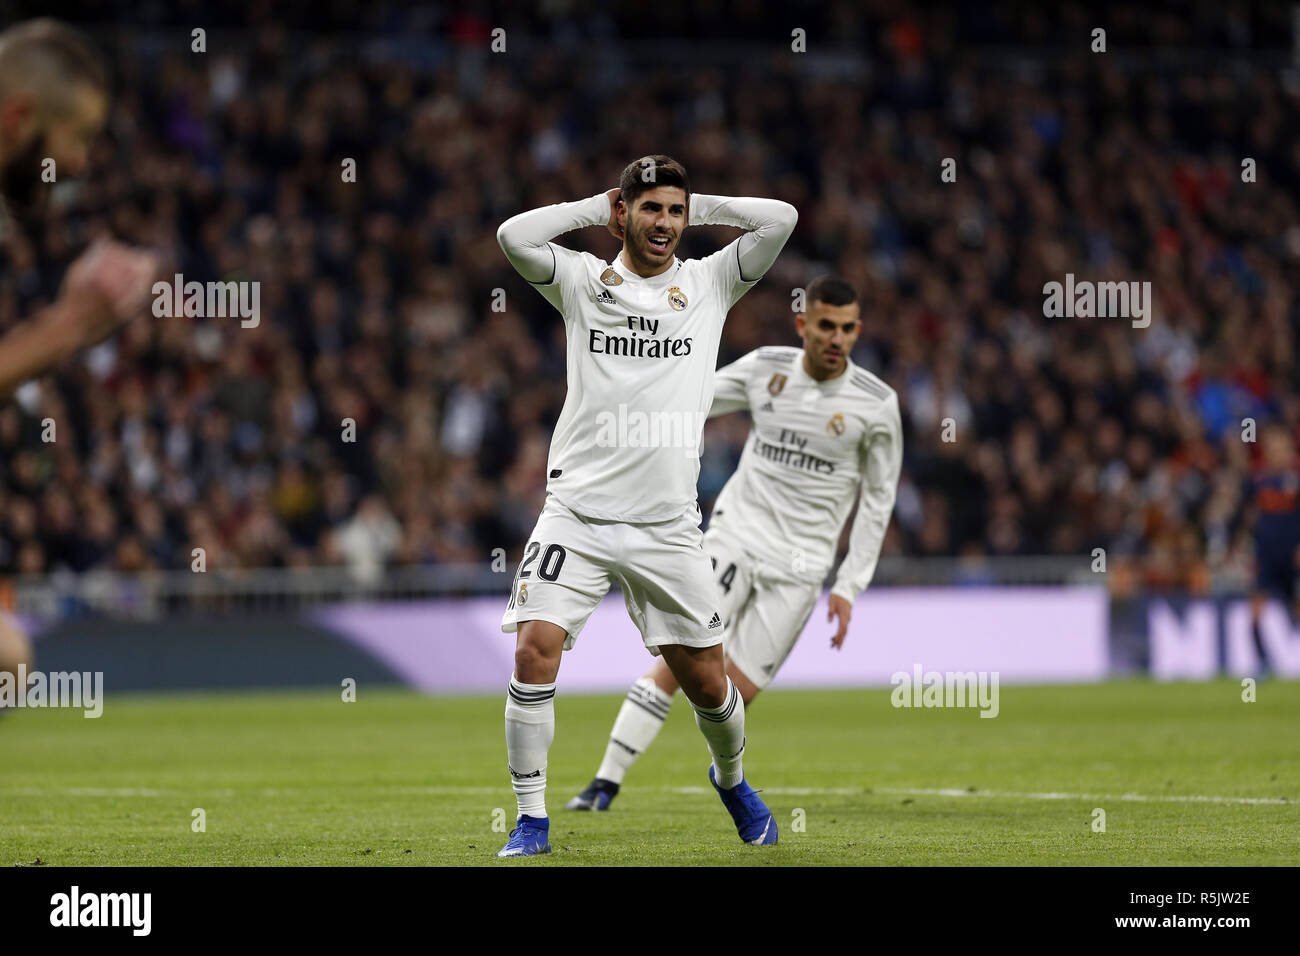 Madrid, Madrid, Spain. 1st Dec, 2018. Marco Asensio (Real Madrid) seen  reacting during the La Liga match between Real Madrid and Valencia CF at  the Estadio Santiago Bernabéu in Madrid. Credit: Manu